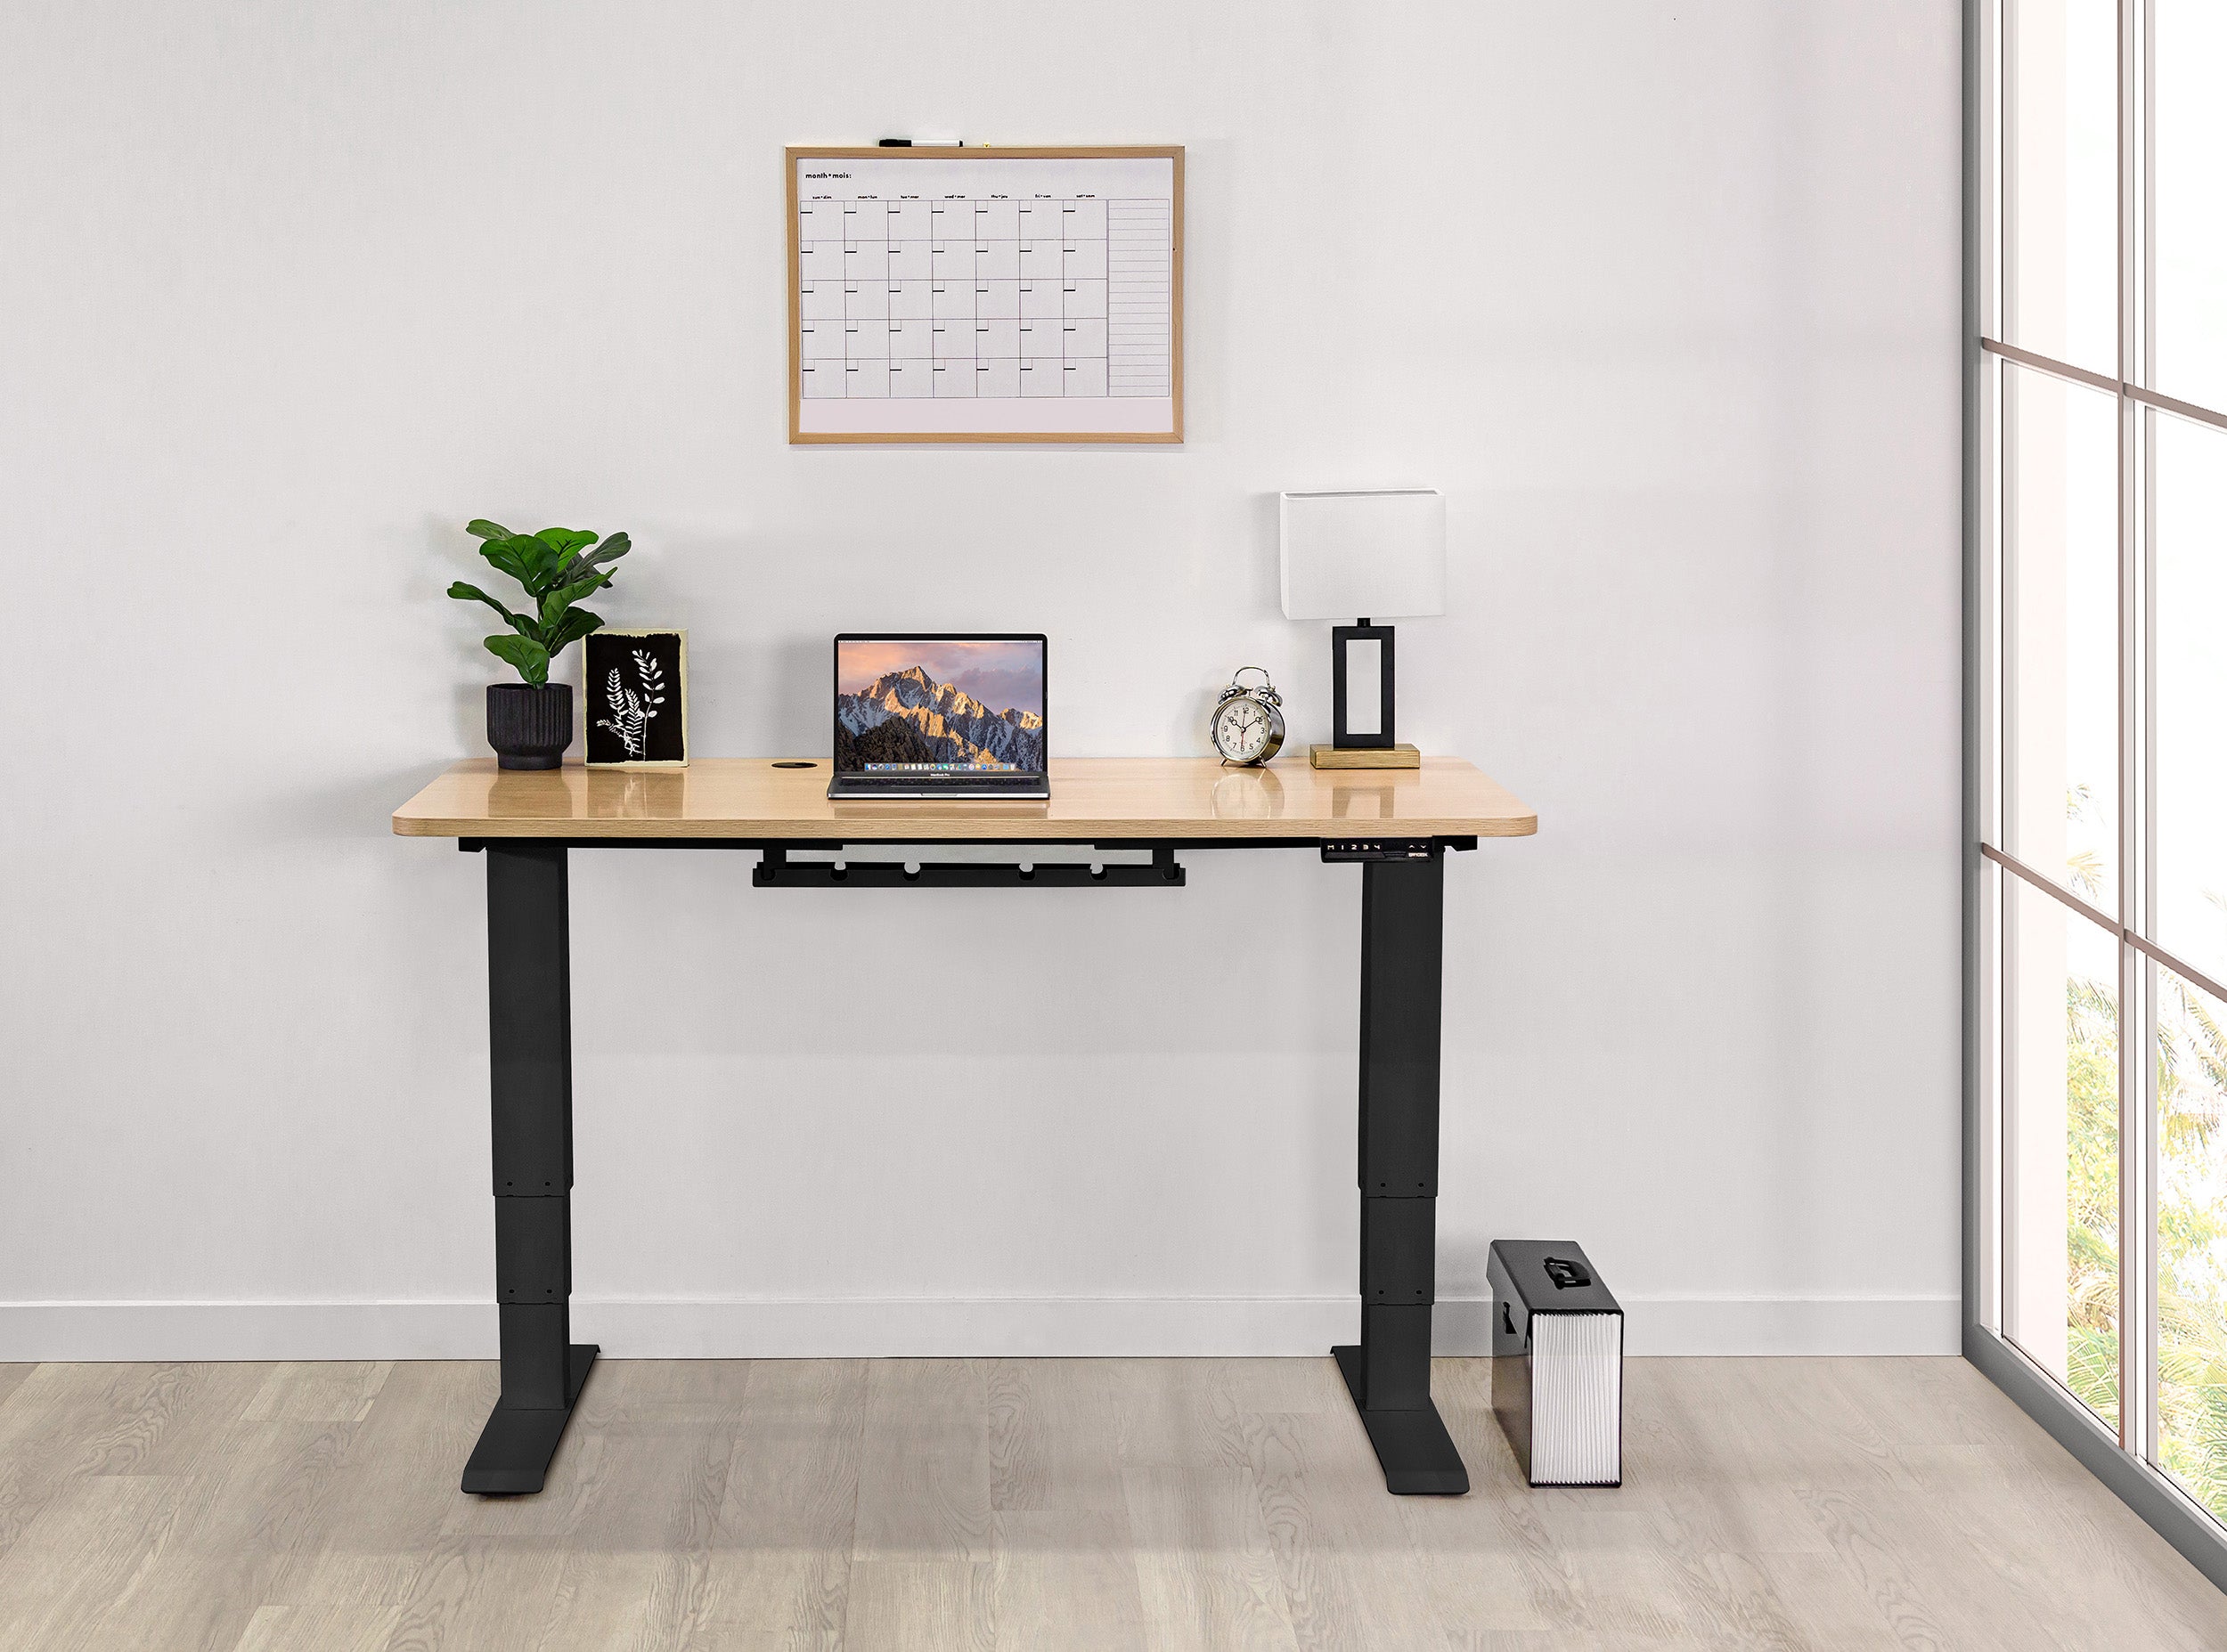 Standing Desks - Desks for Working while Standing Up - HSN